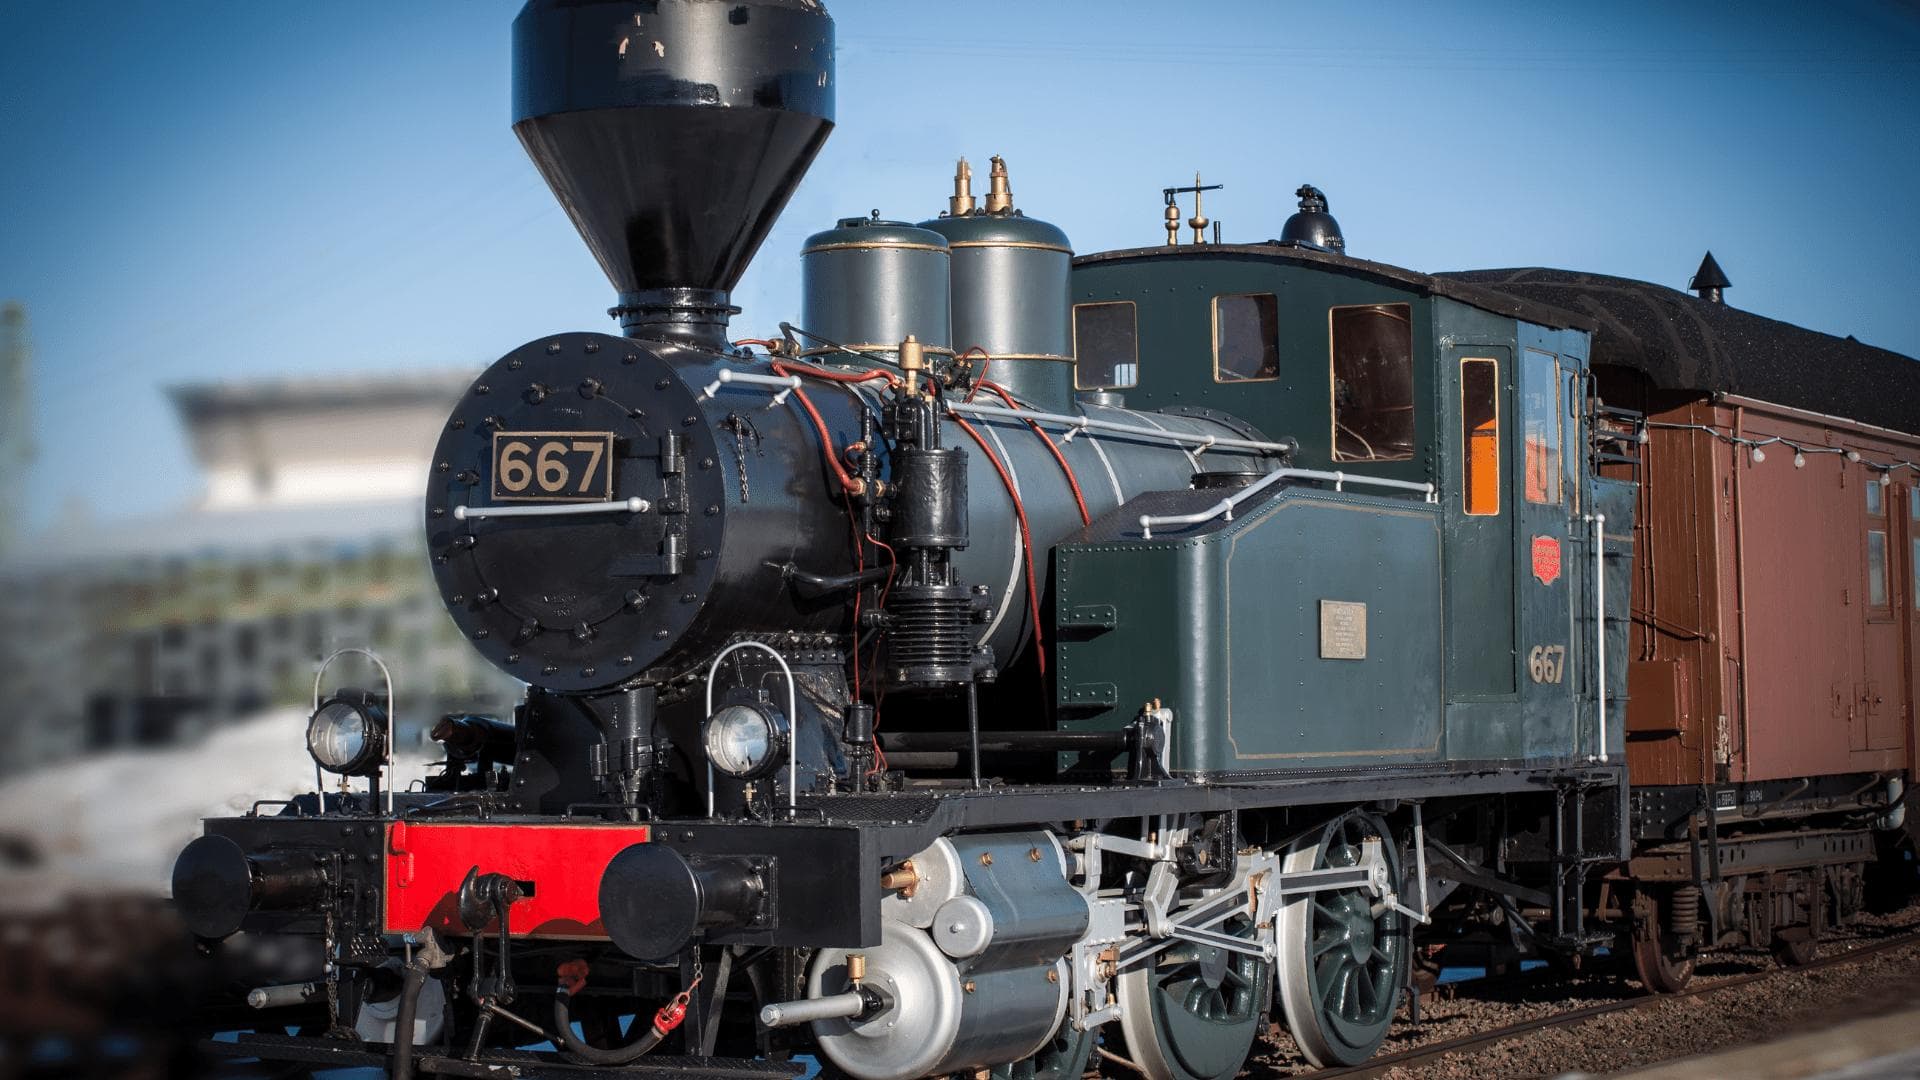 Old Locomotive Showcasing History of Railroad Technology